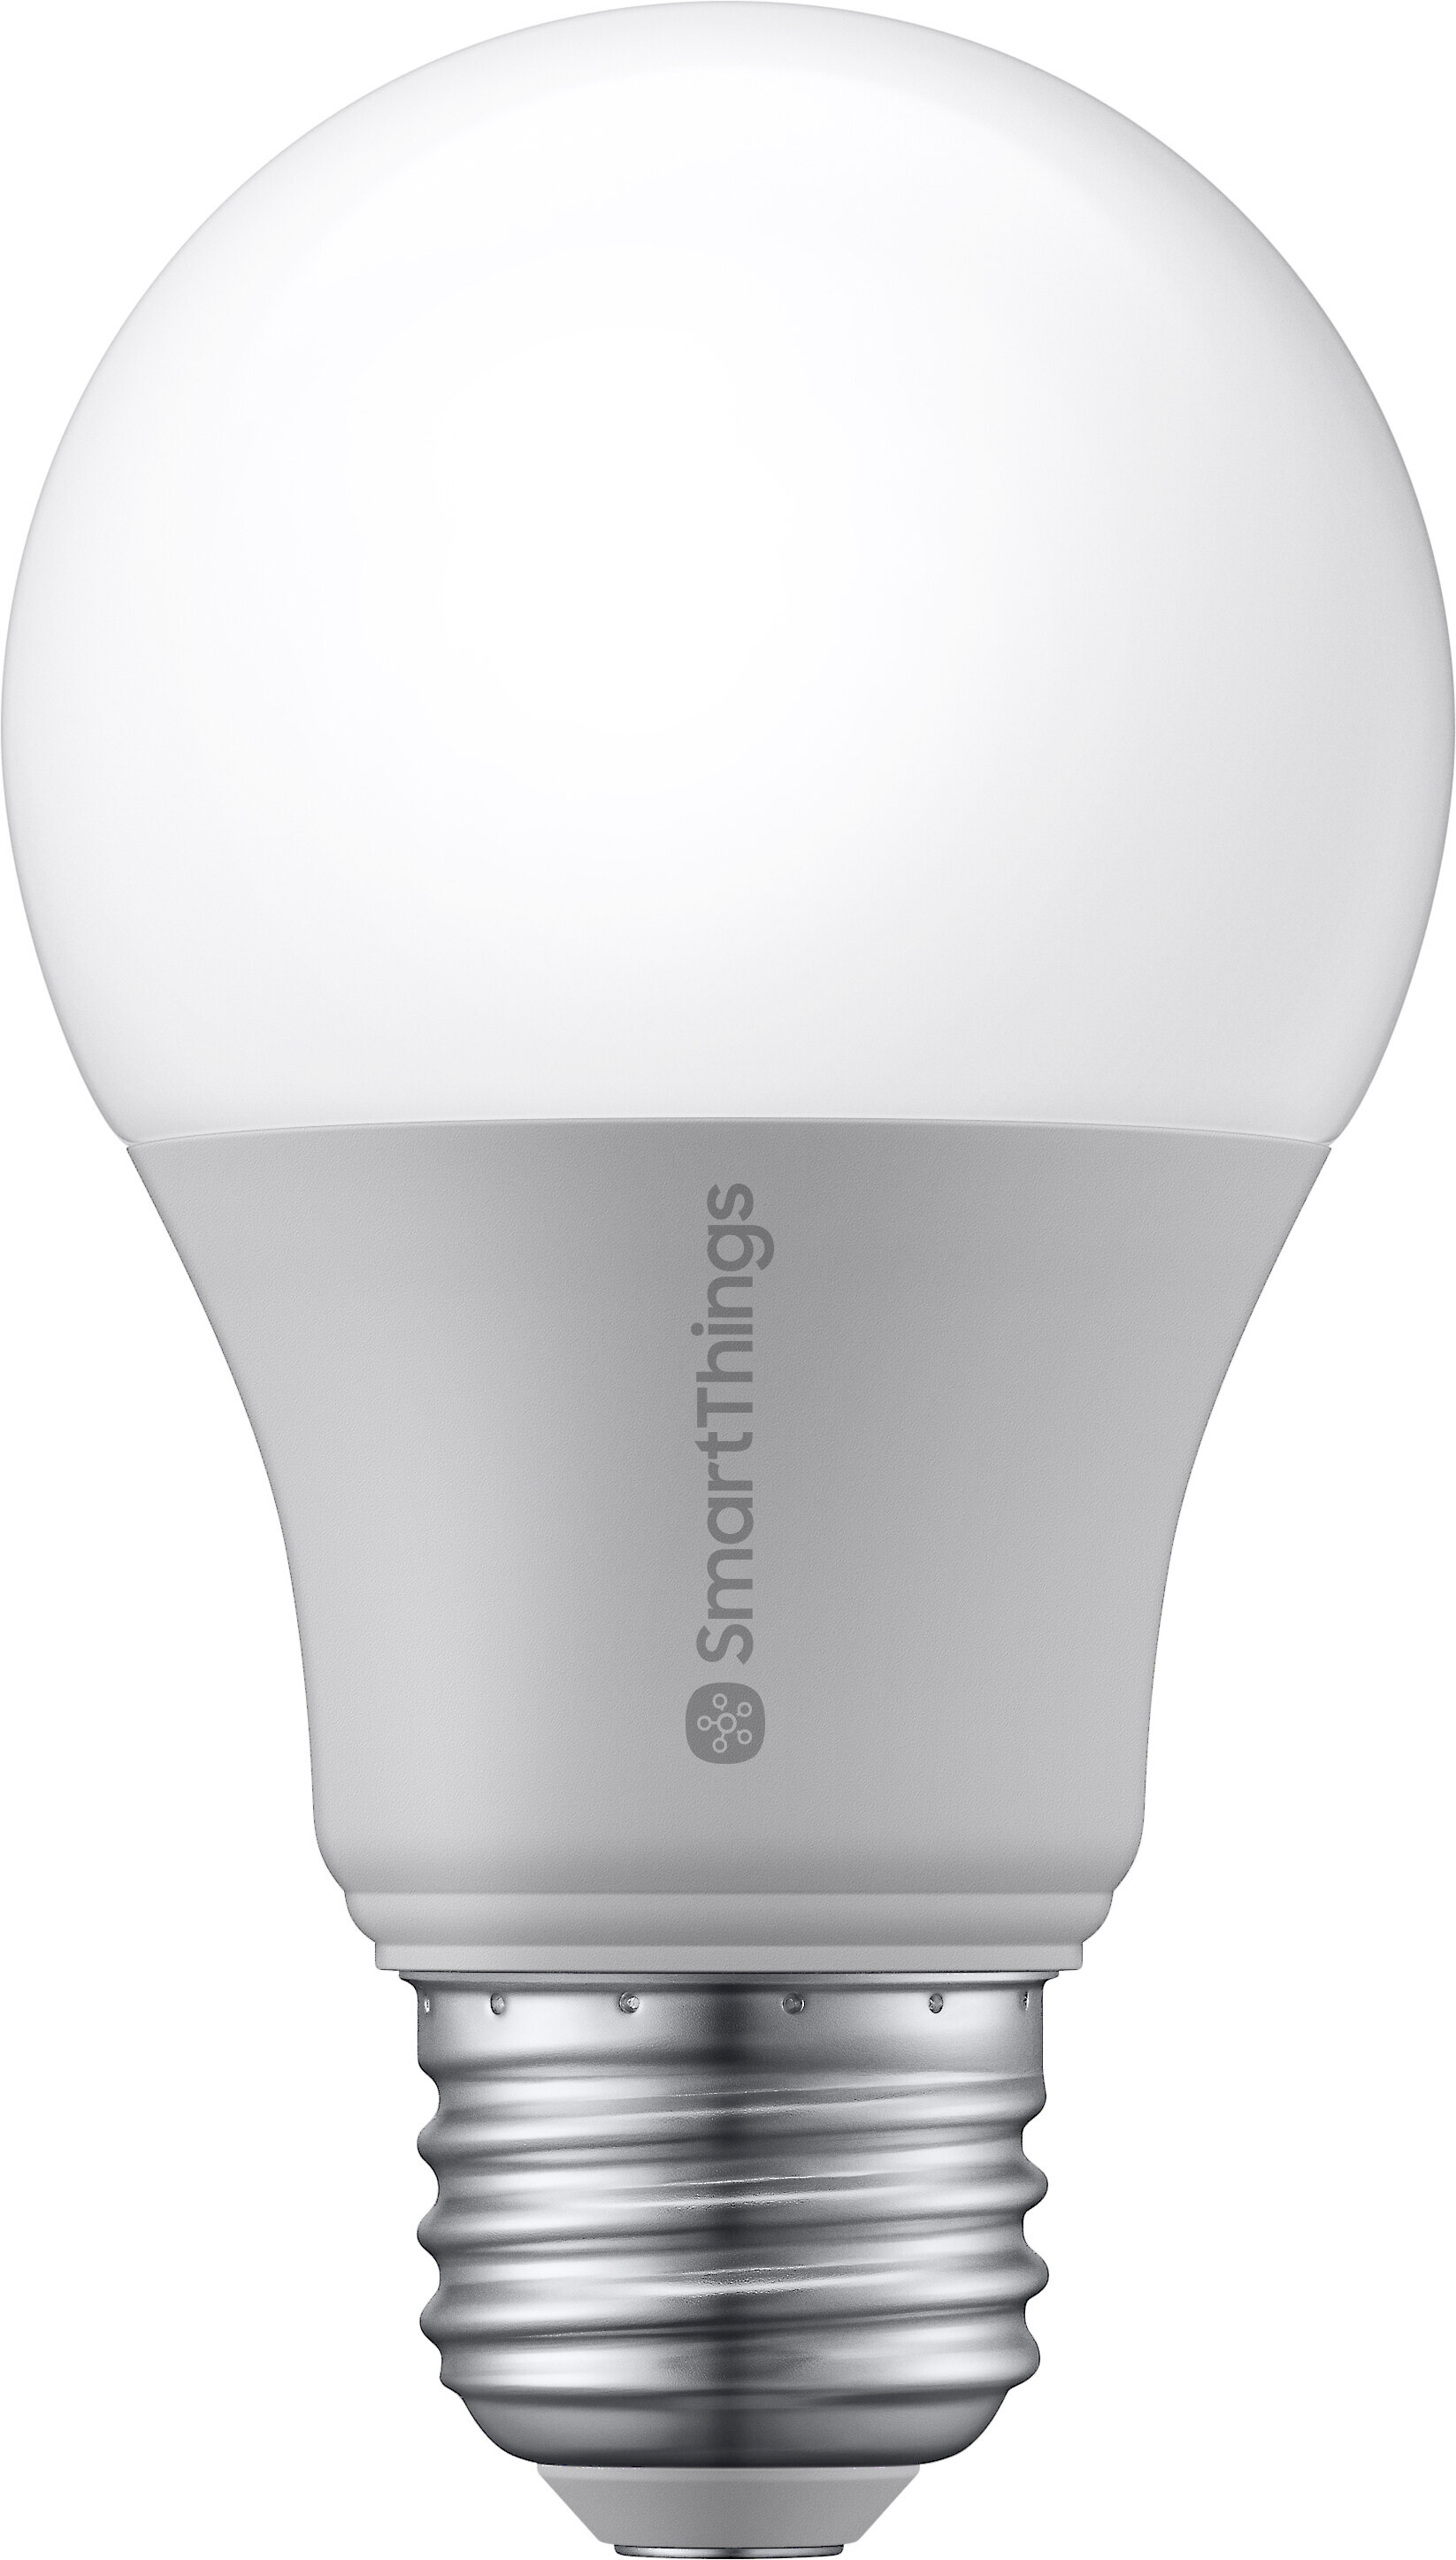 wemo light bulb google home